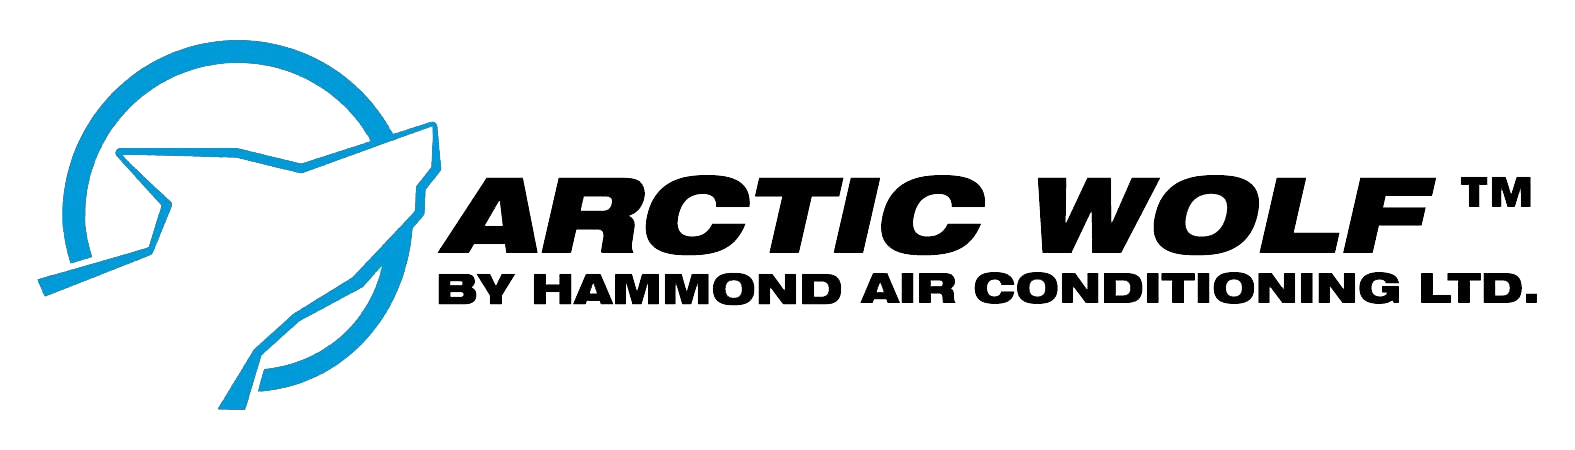 Hammond Logo - Hammond Air Conditioning Ltd. Equipment Integrated